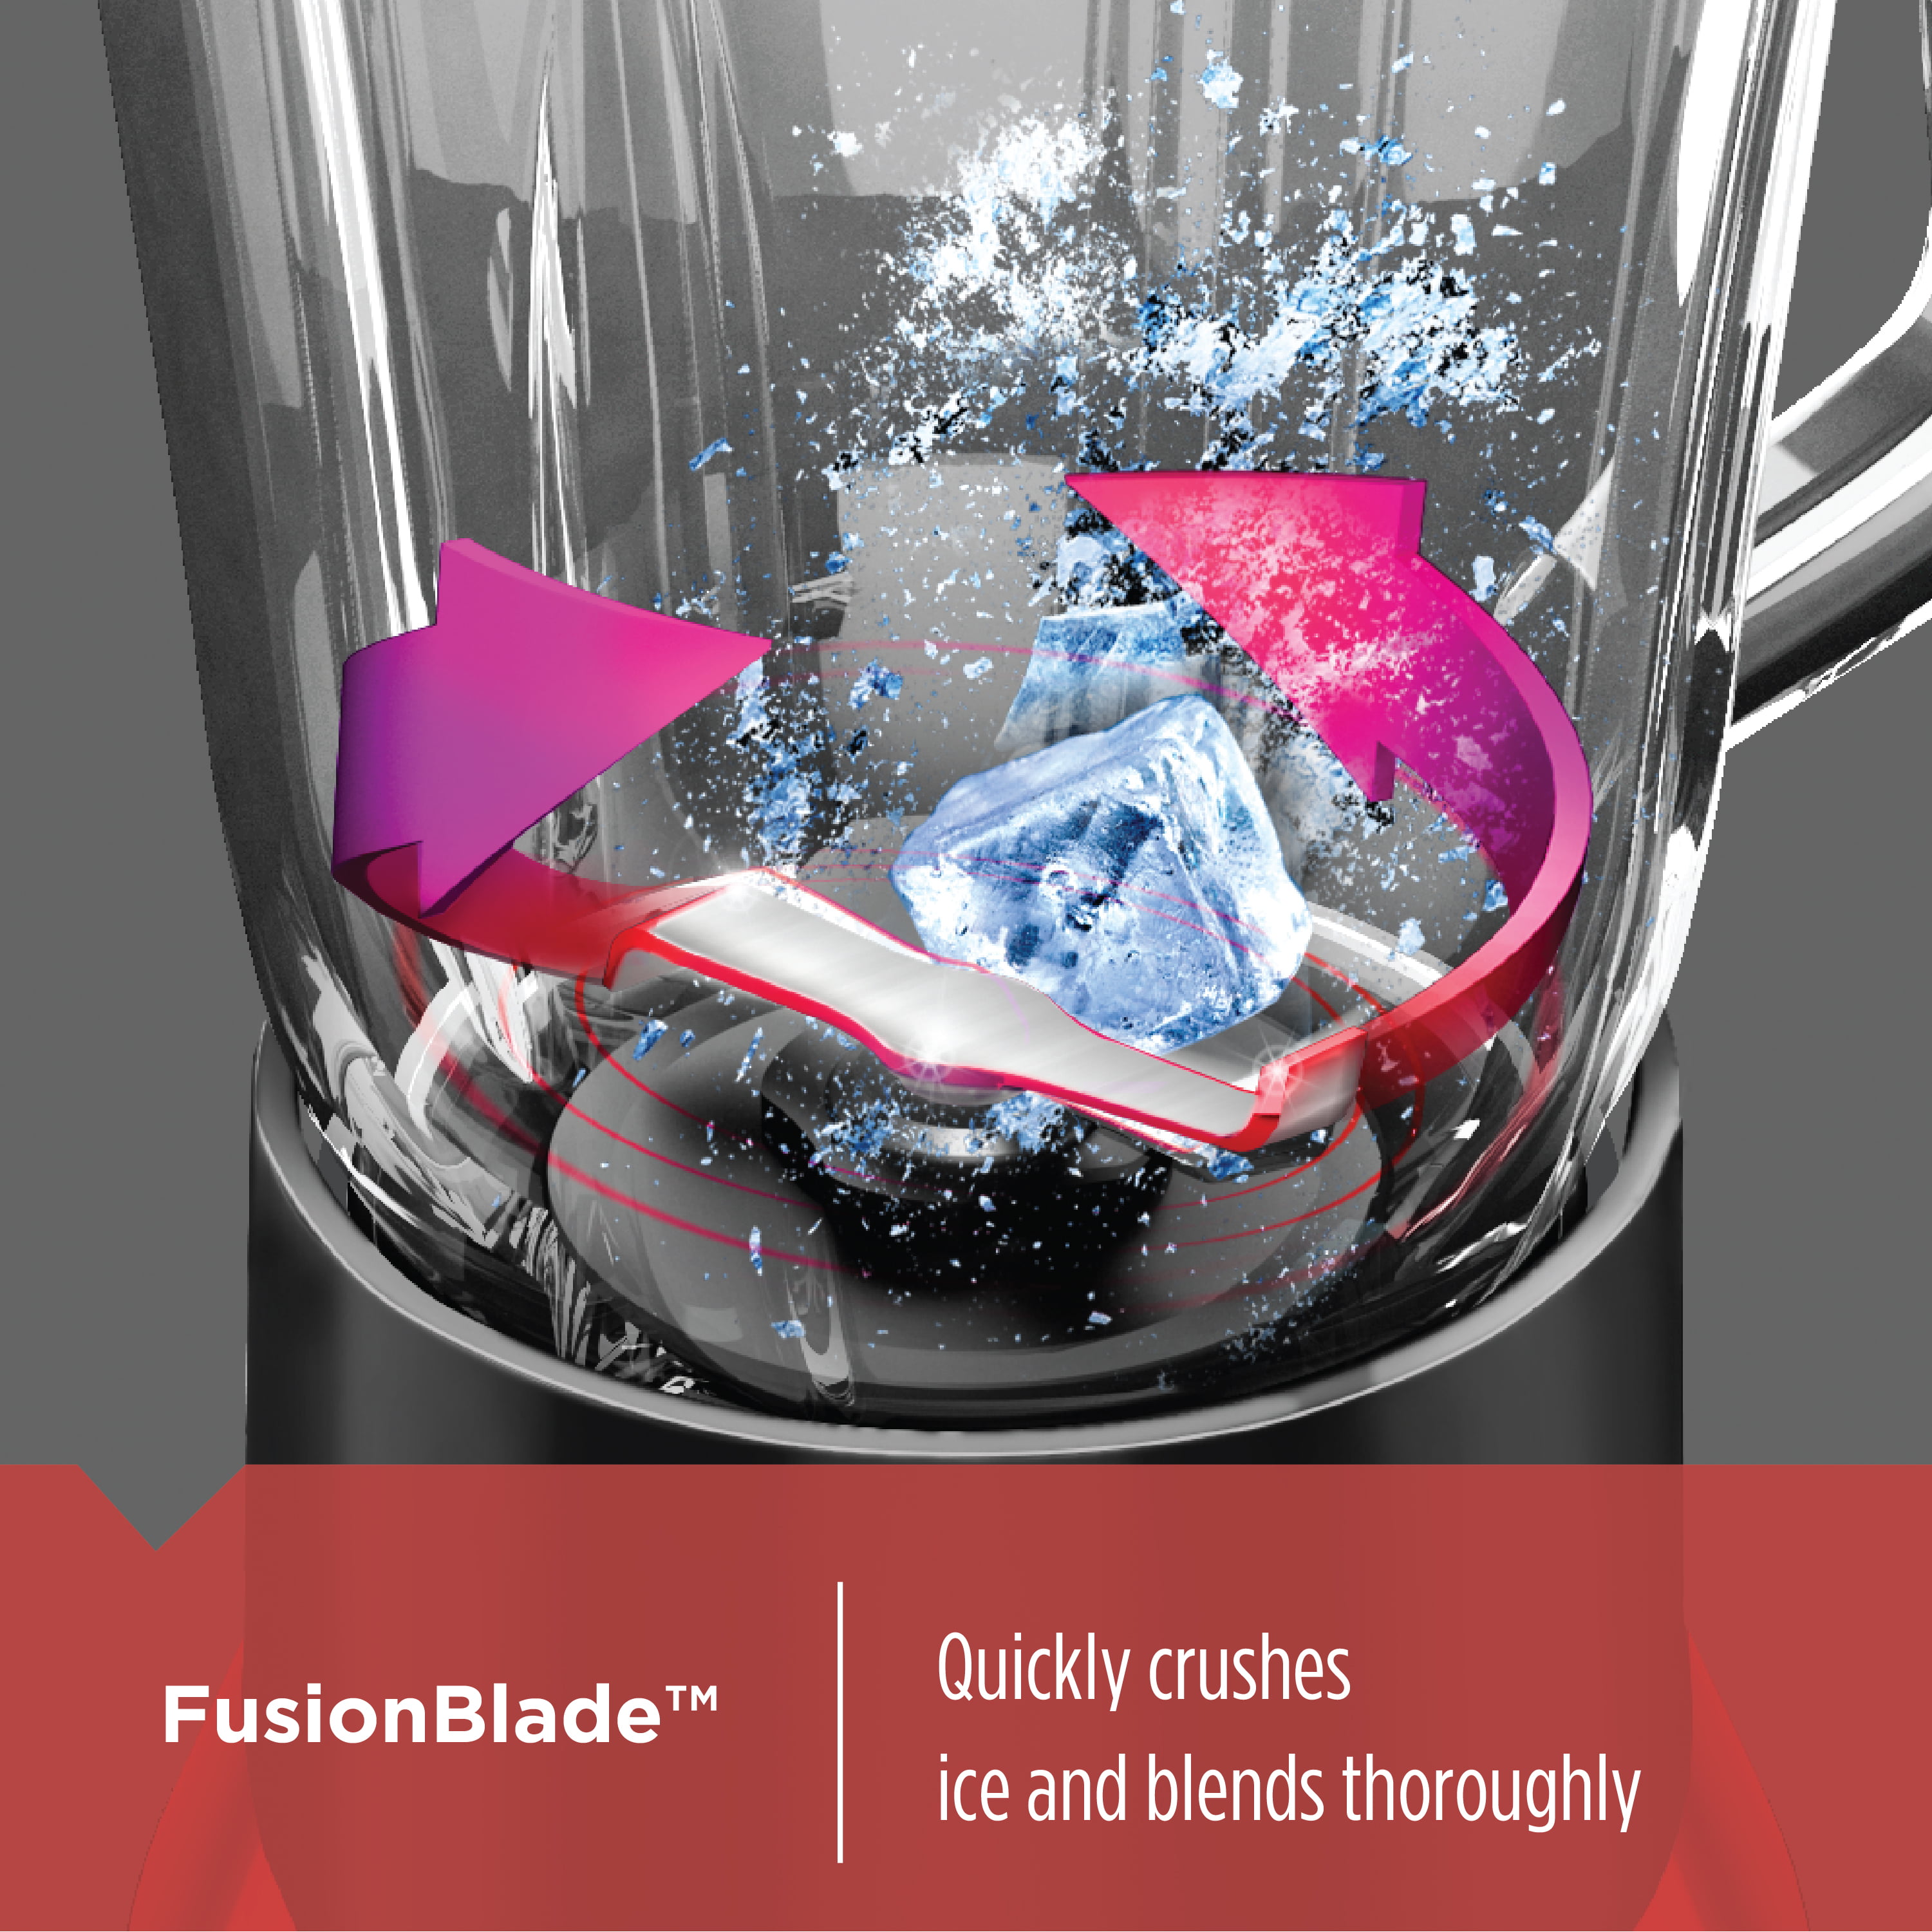 Black & Decker PB1002R Fusion Blade Personal Blender, Red for sale online